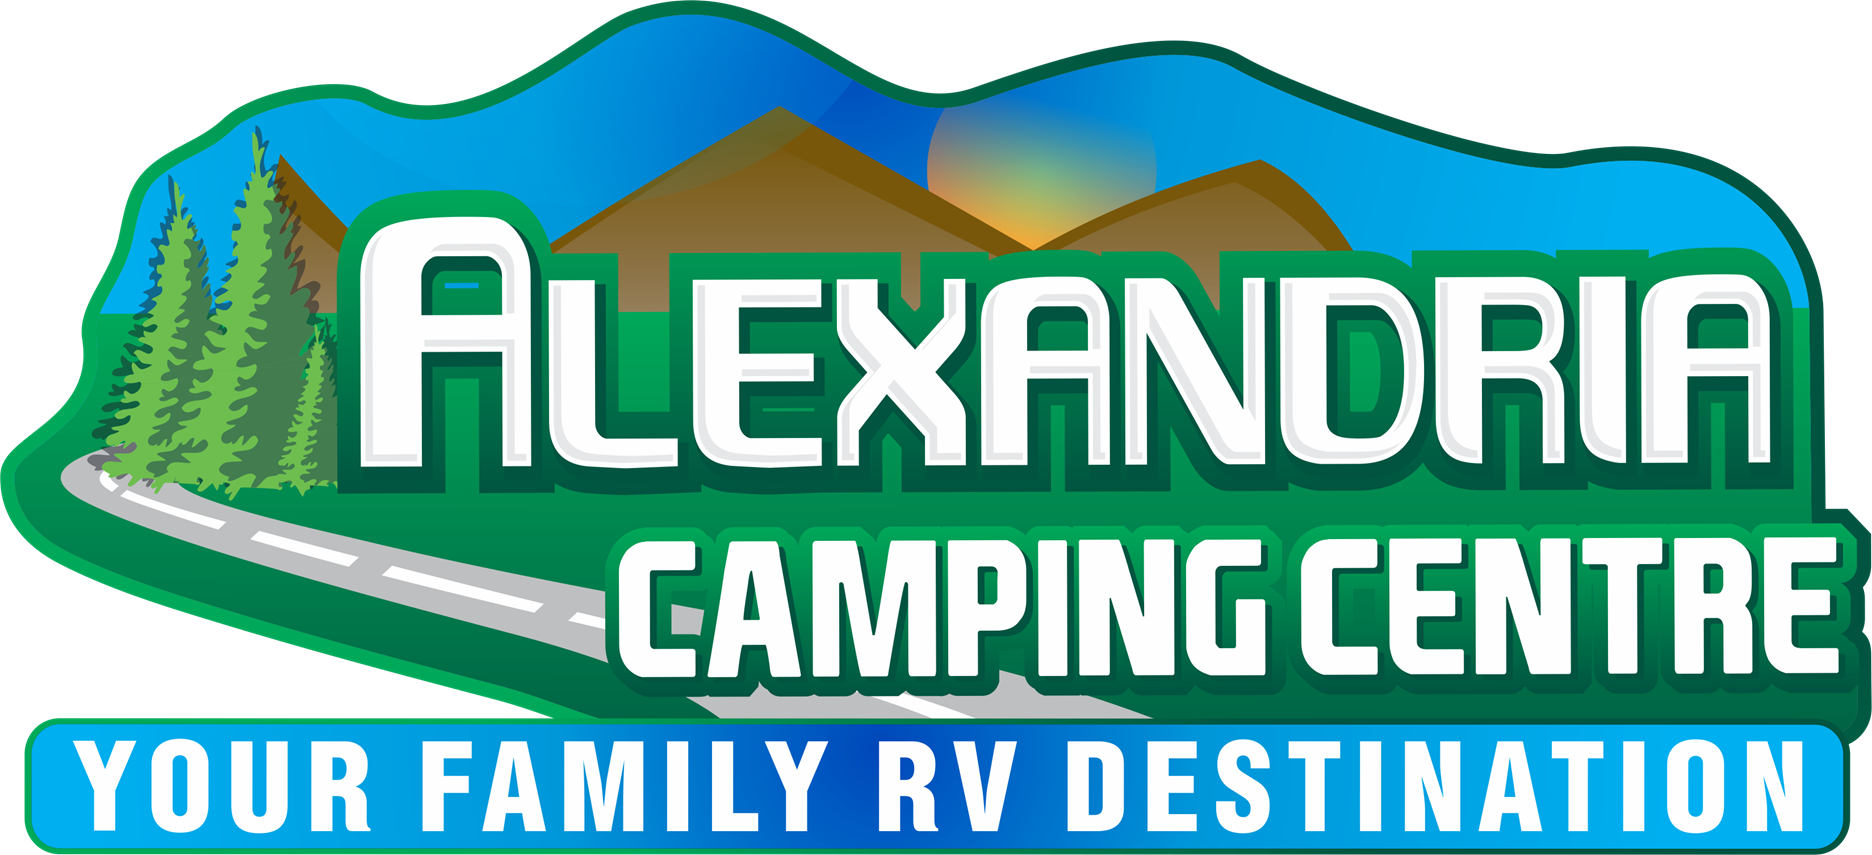 Alexandria Camping Centre Ltd. Logo